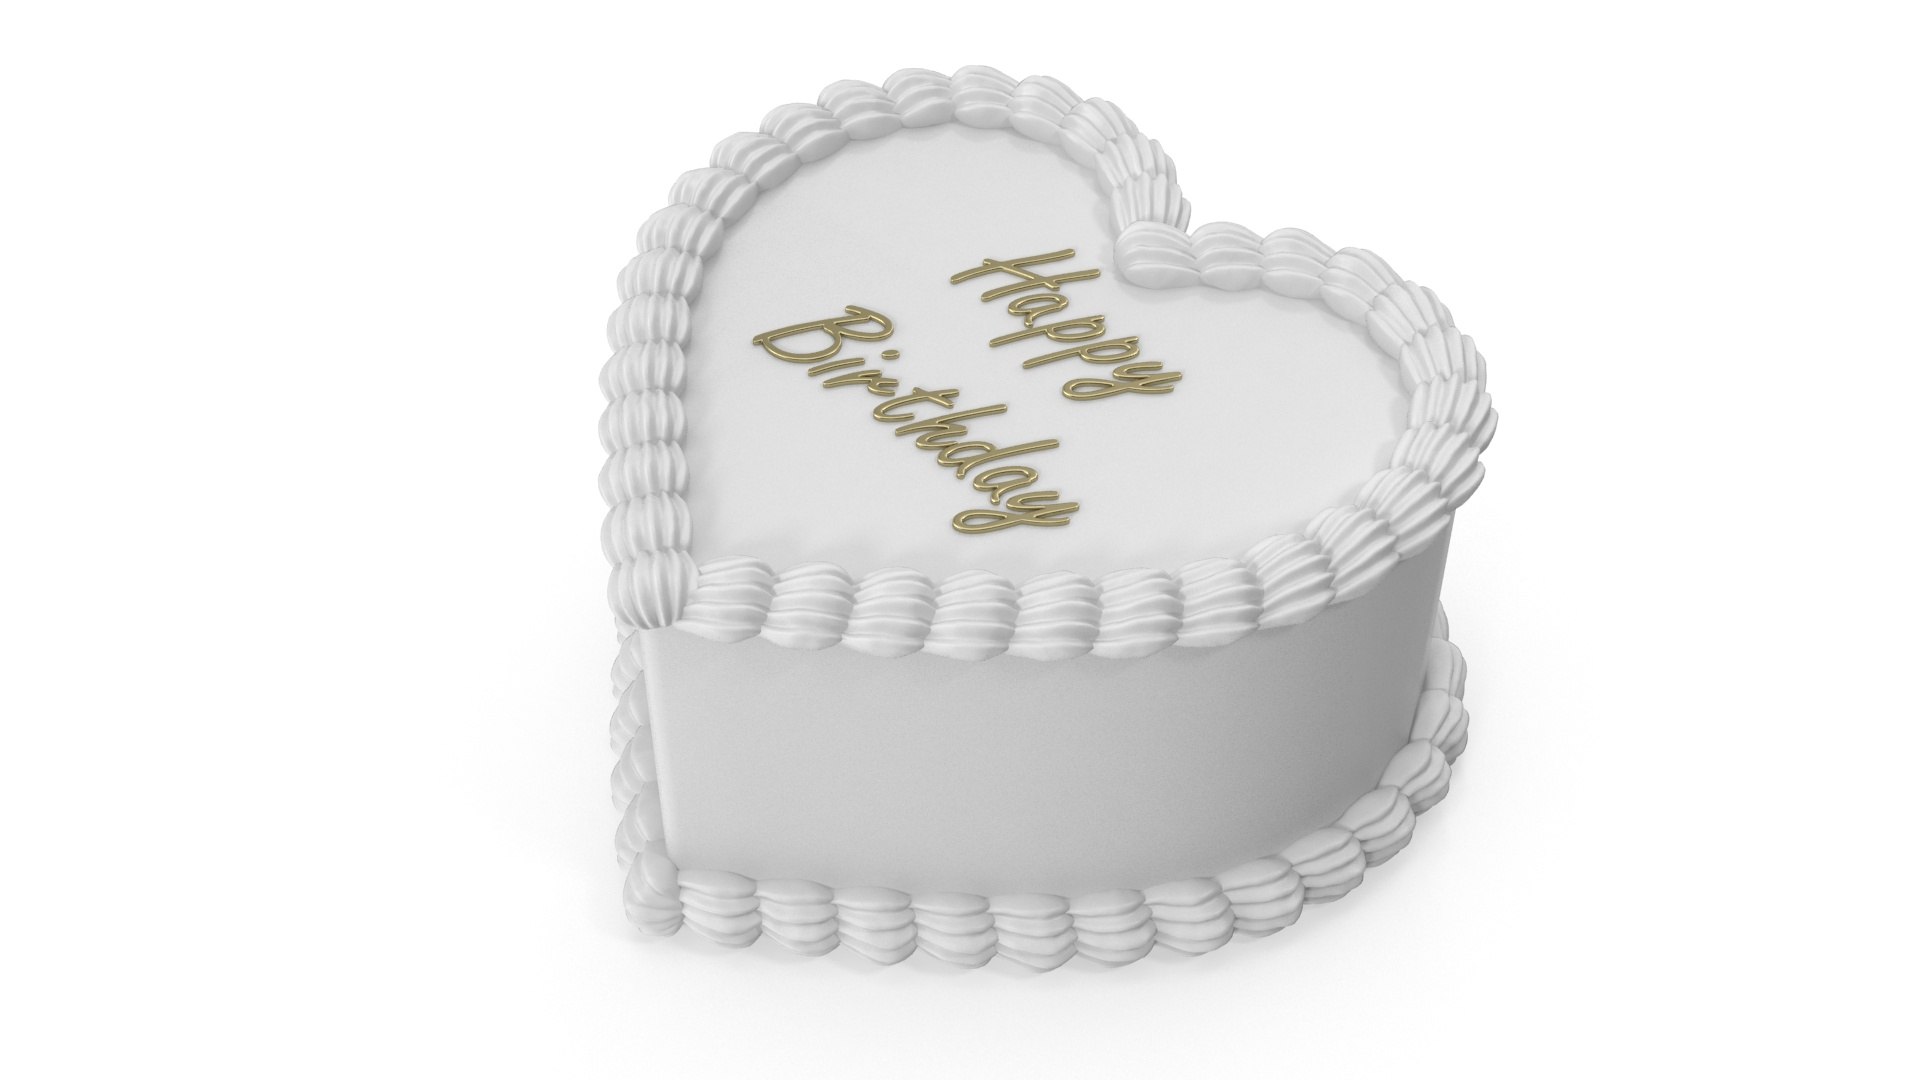 Classic White Heart Cake - Sugar Whipped Cakes Website